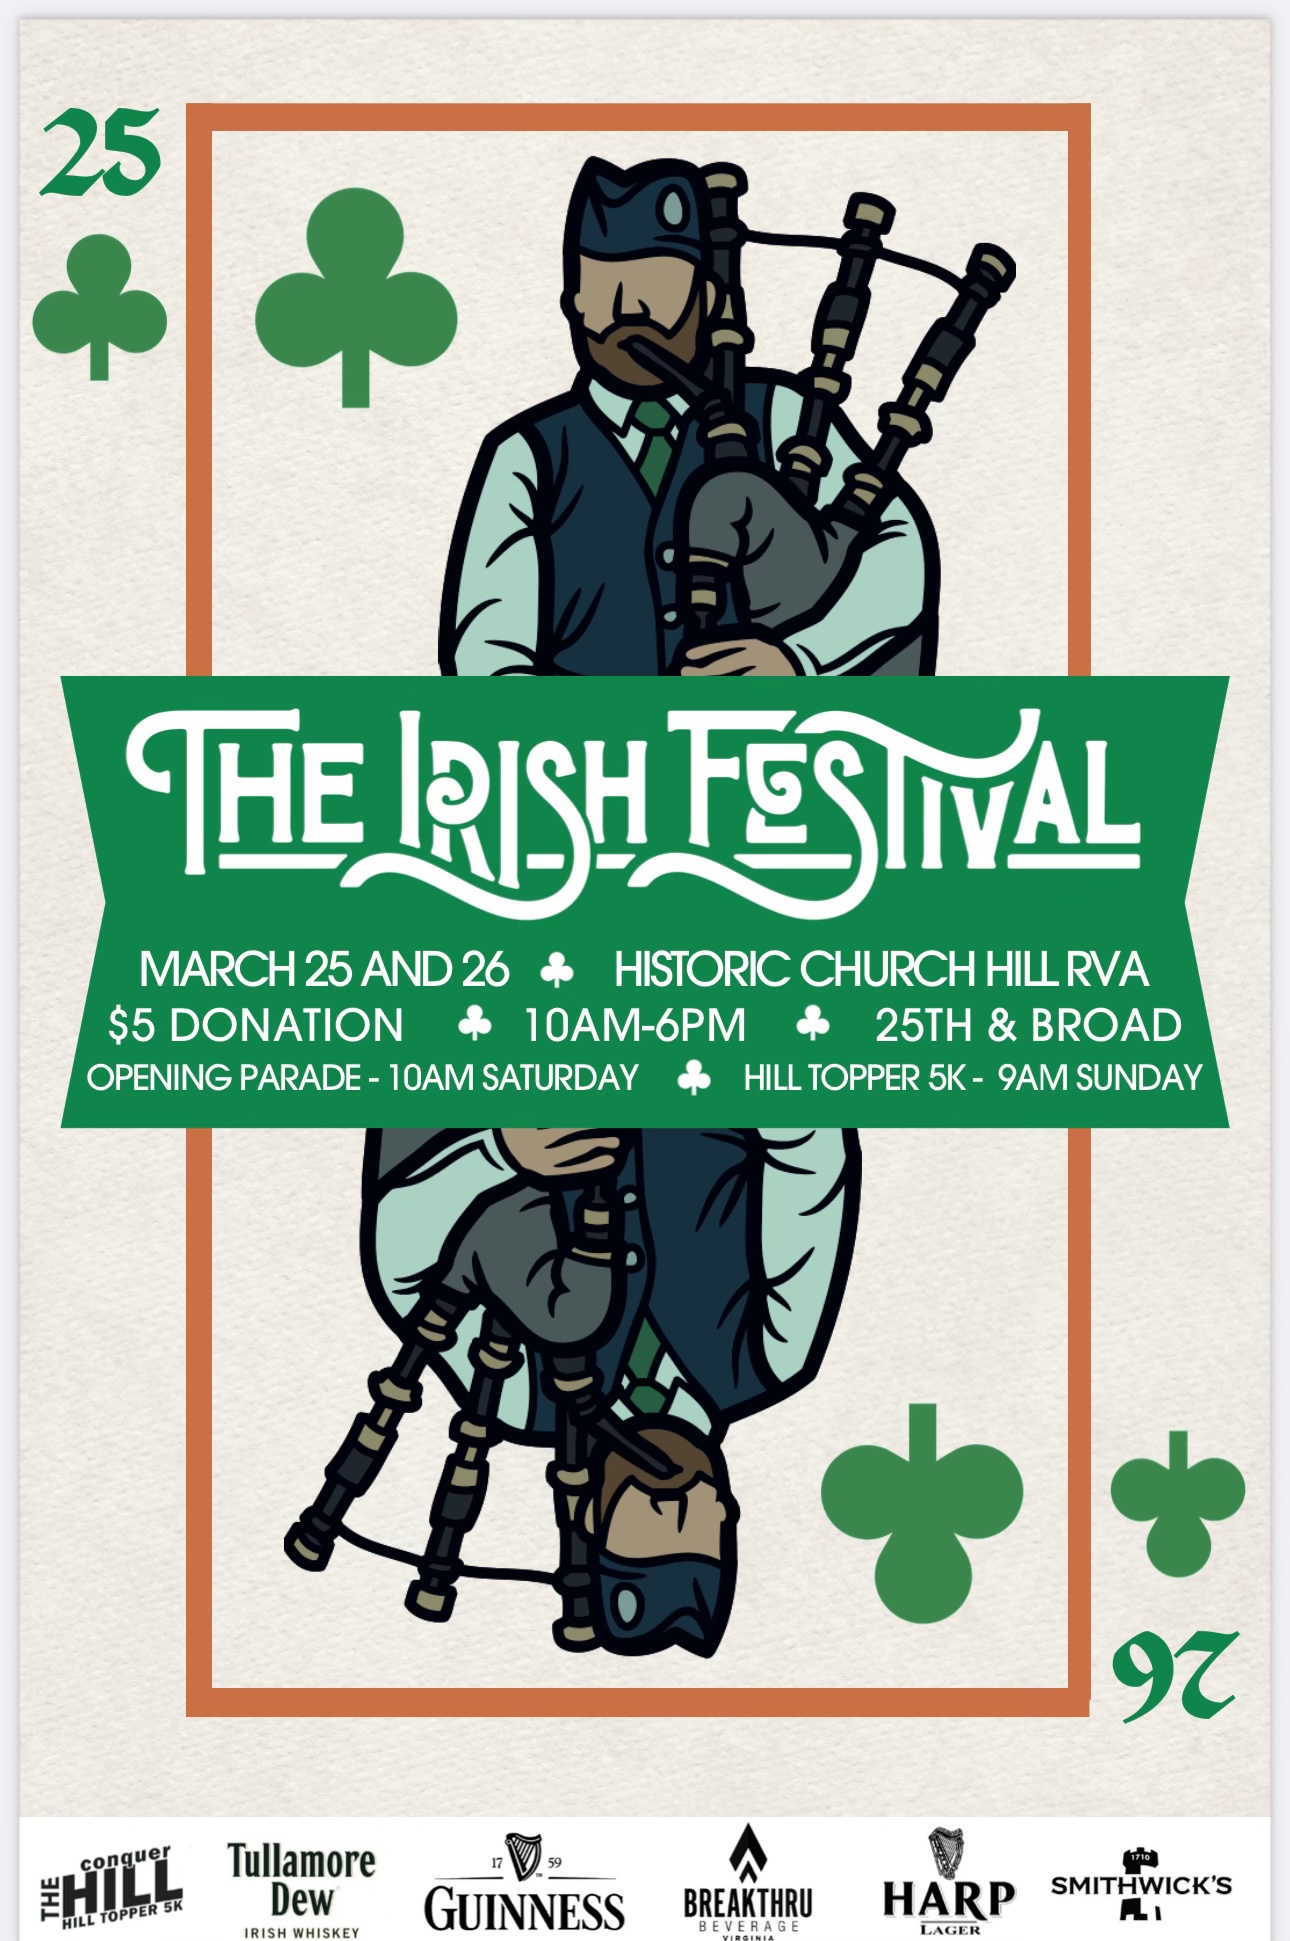 THE IRISH FESTIVAL